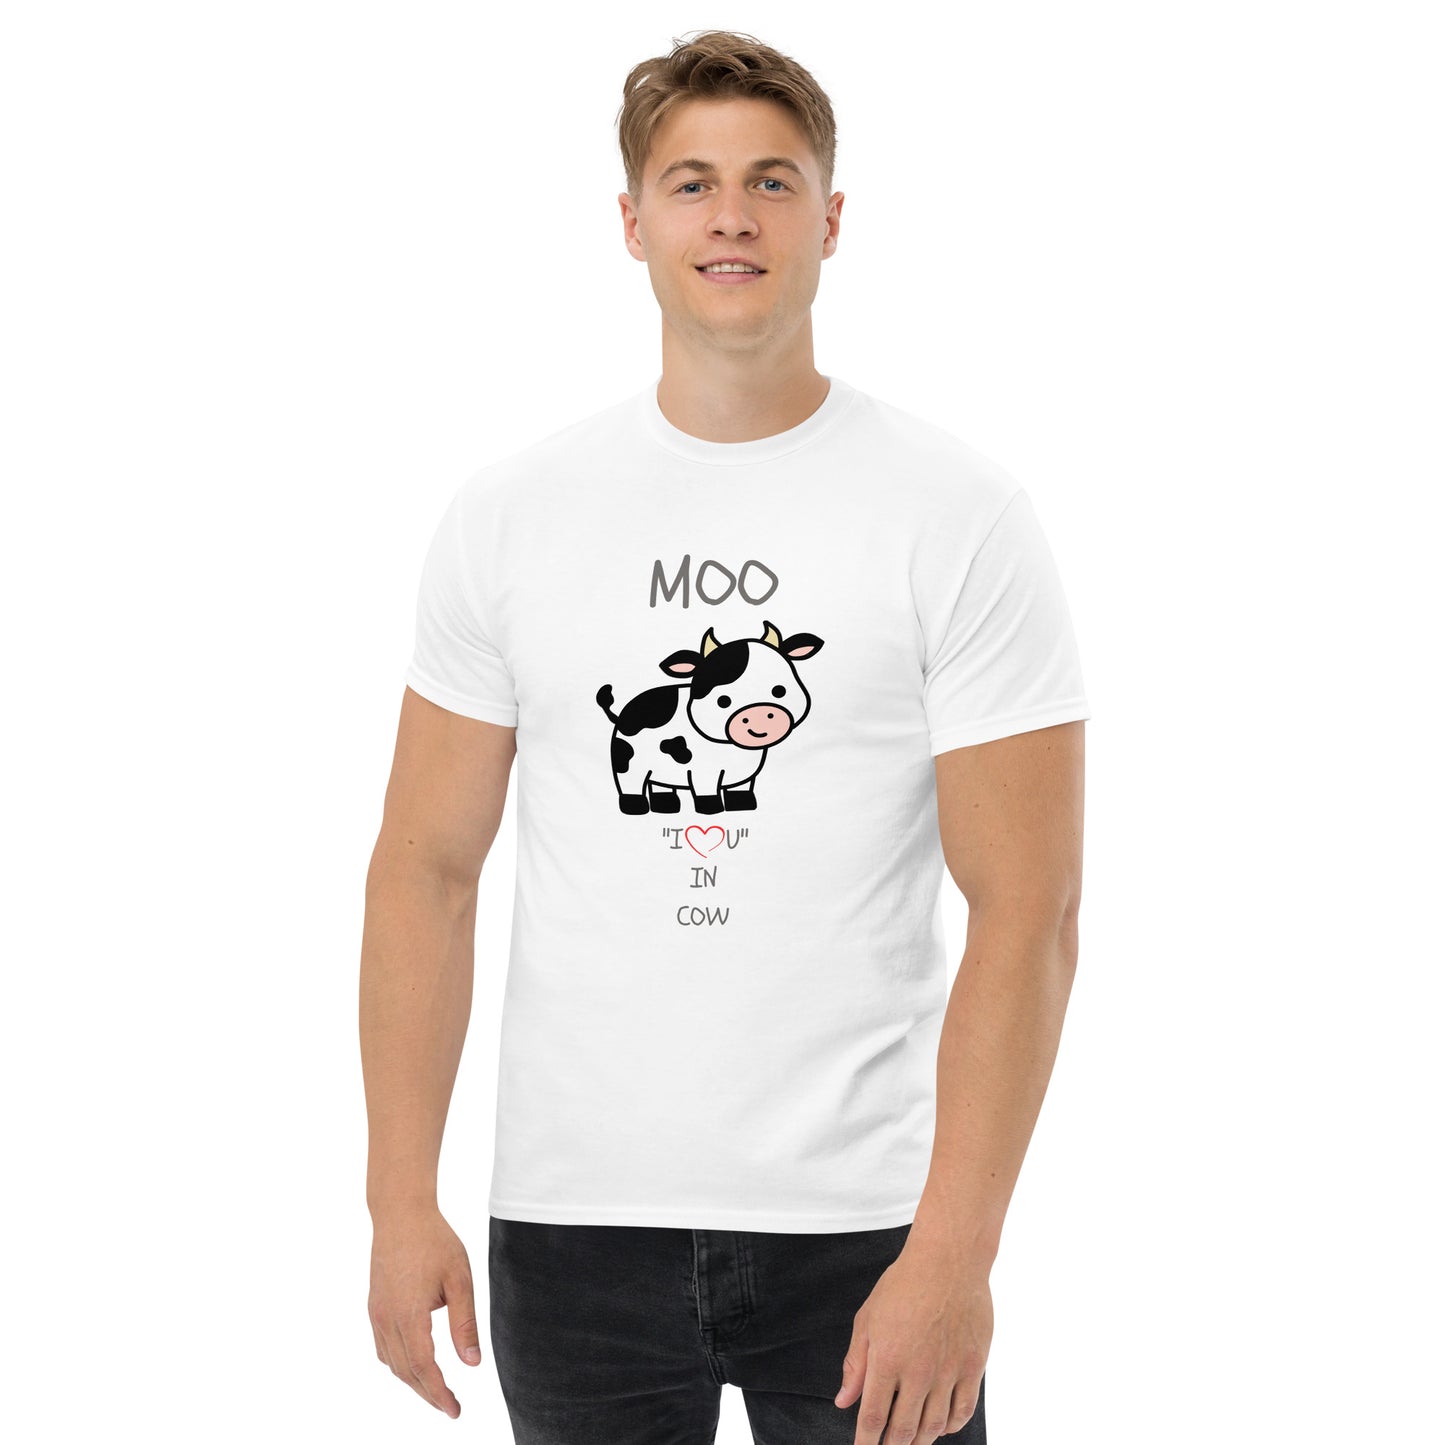 MOO "I LOVE U" IN COW Men's classic tee